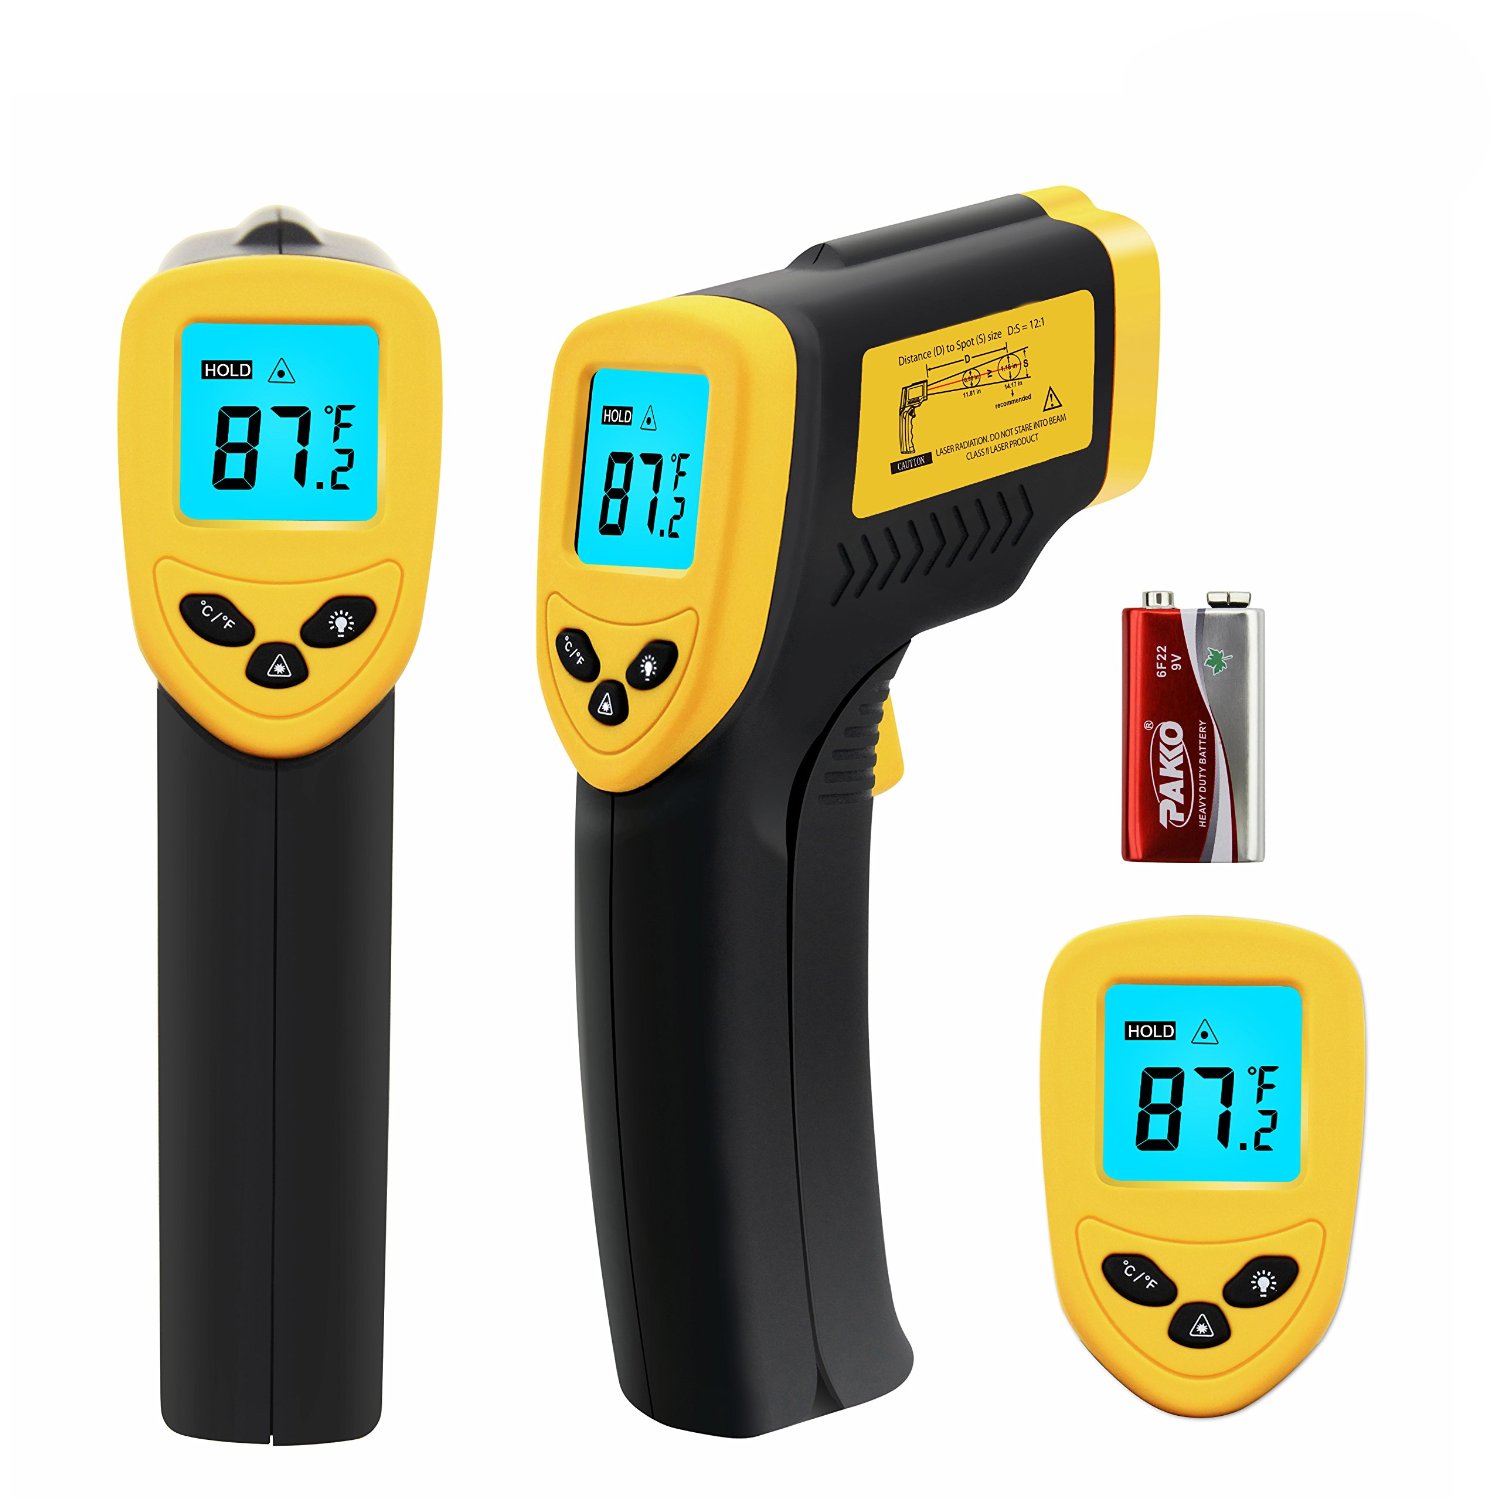 Etekcity  Lasergrip 774 Non-contact Digital Laser IR Infrared Thermometer Temperature Gun, Yellow/Black